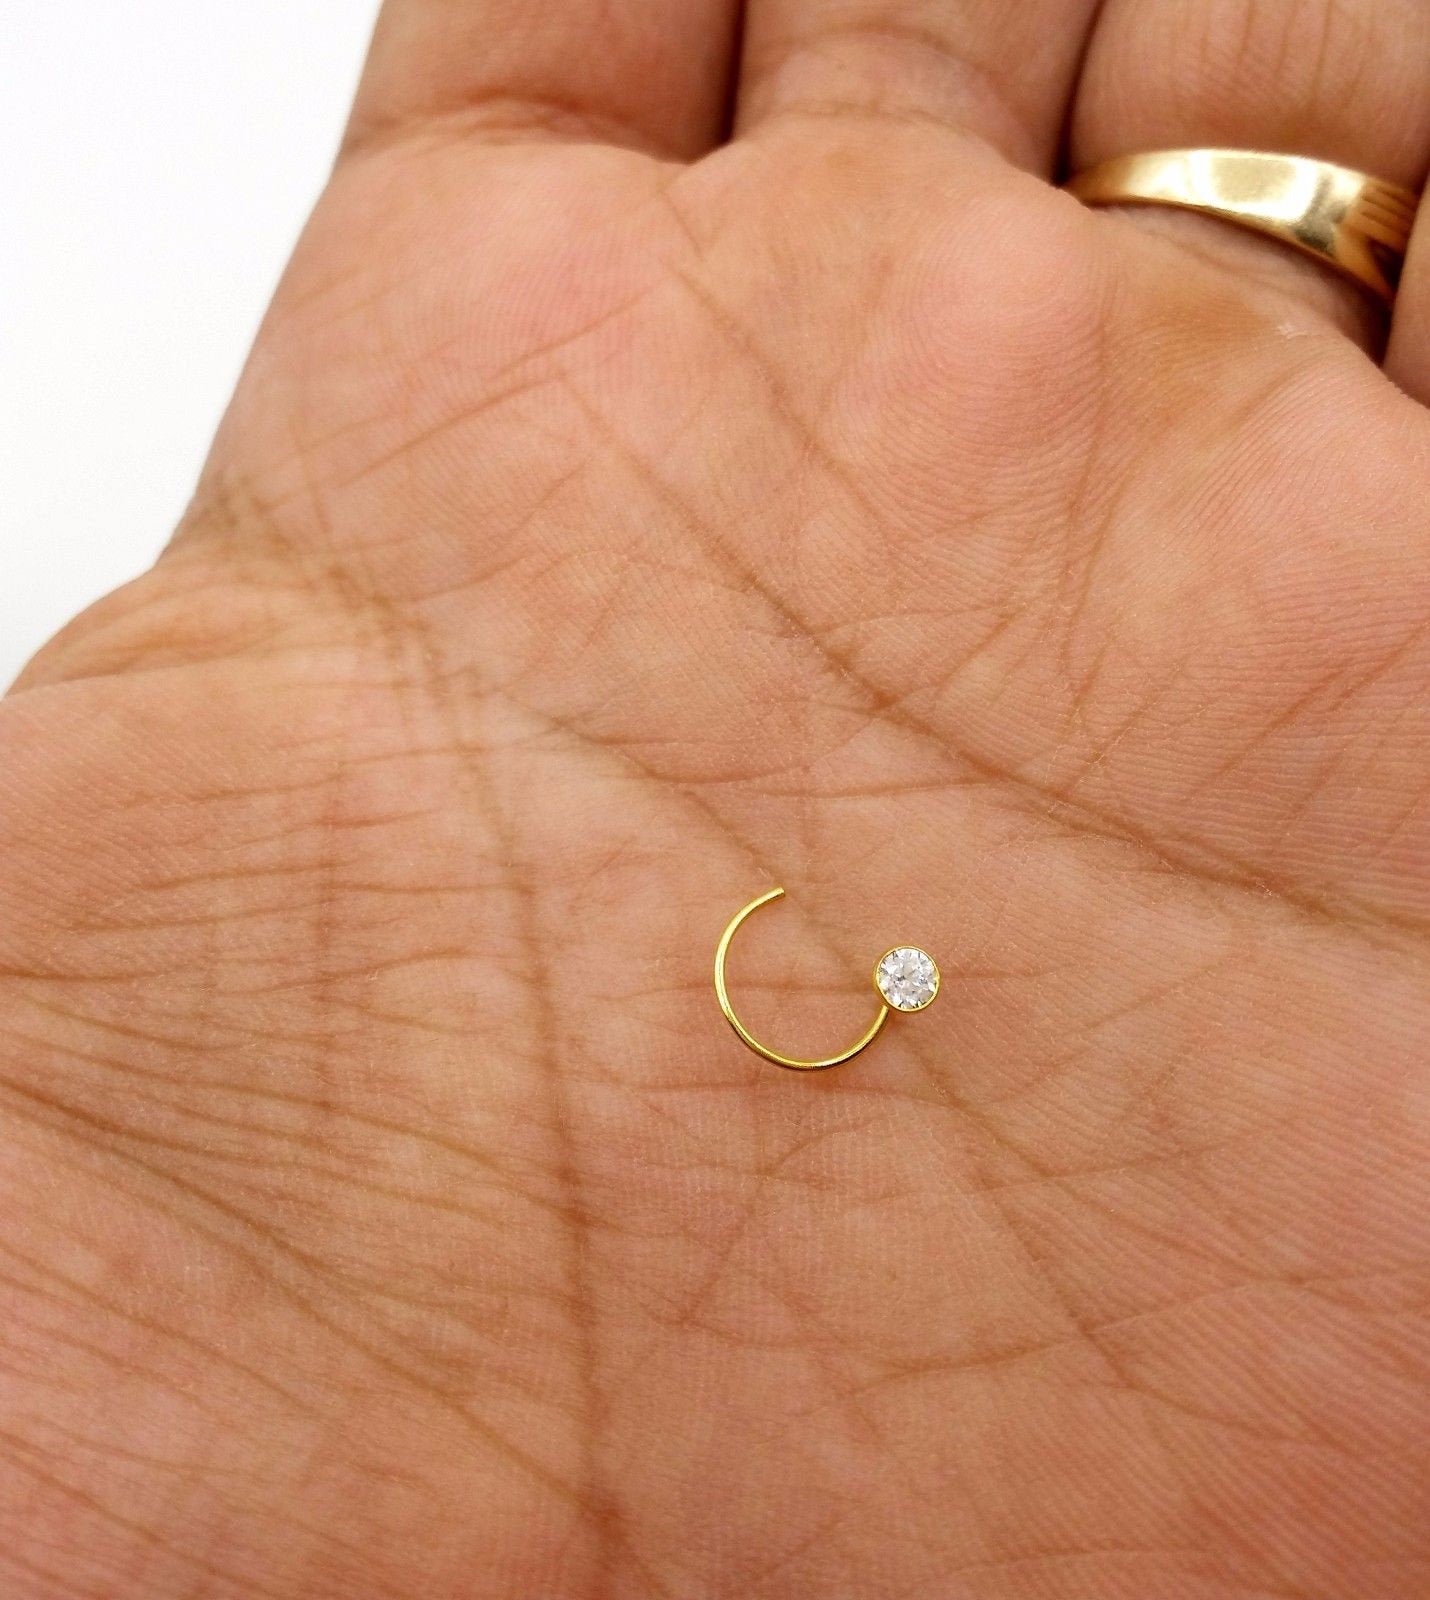 Gold Nose Ring Design 2023आपकी खूबसूरती में चार चाँद लगादेगी